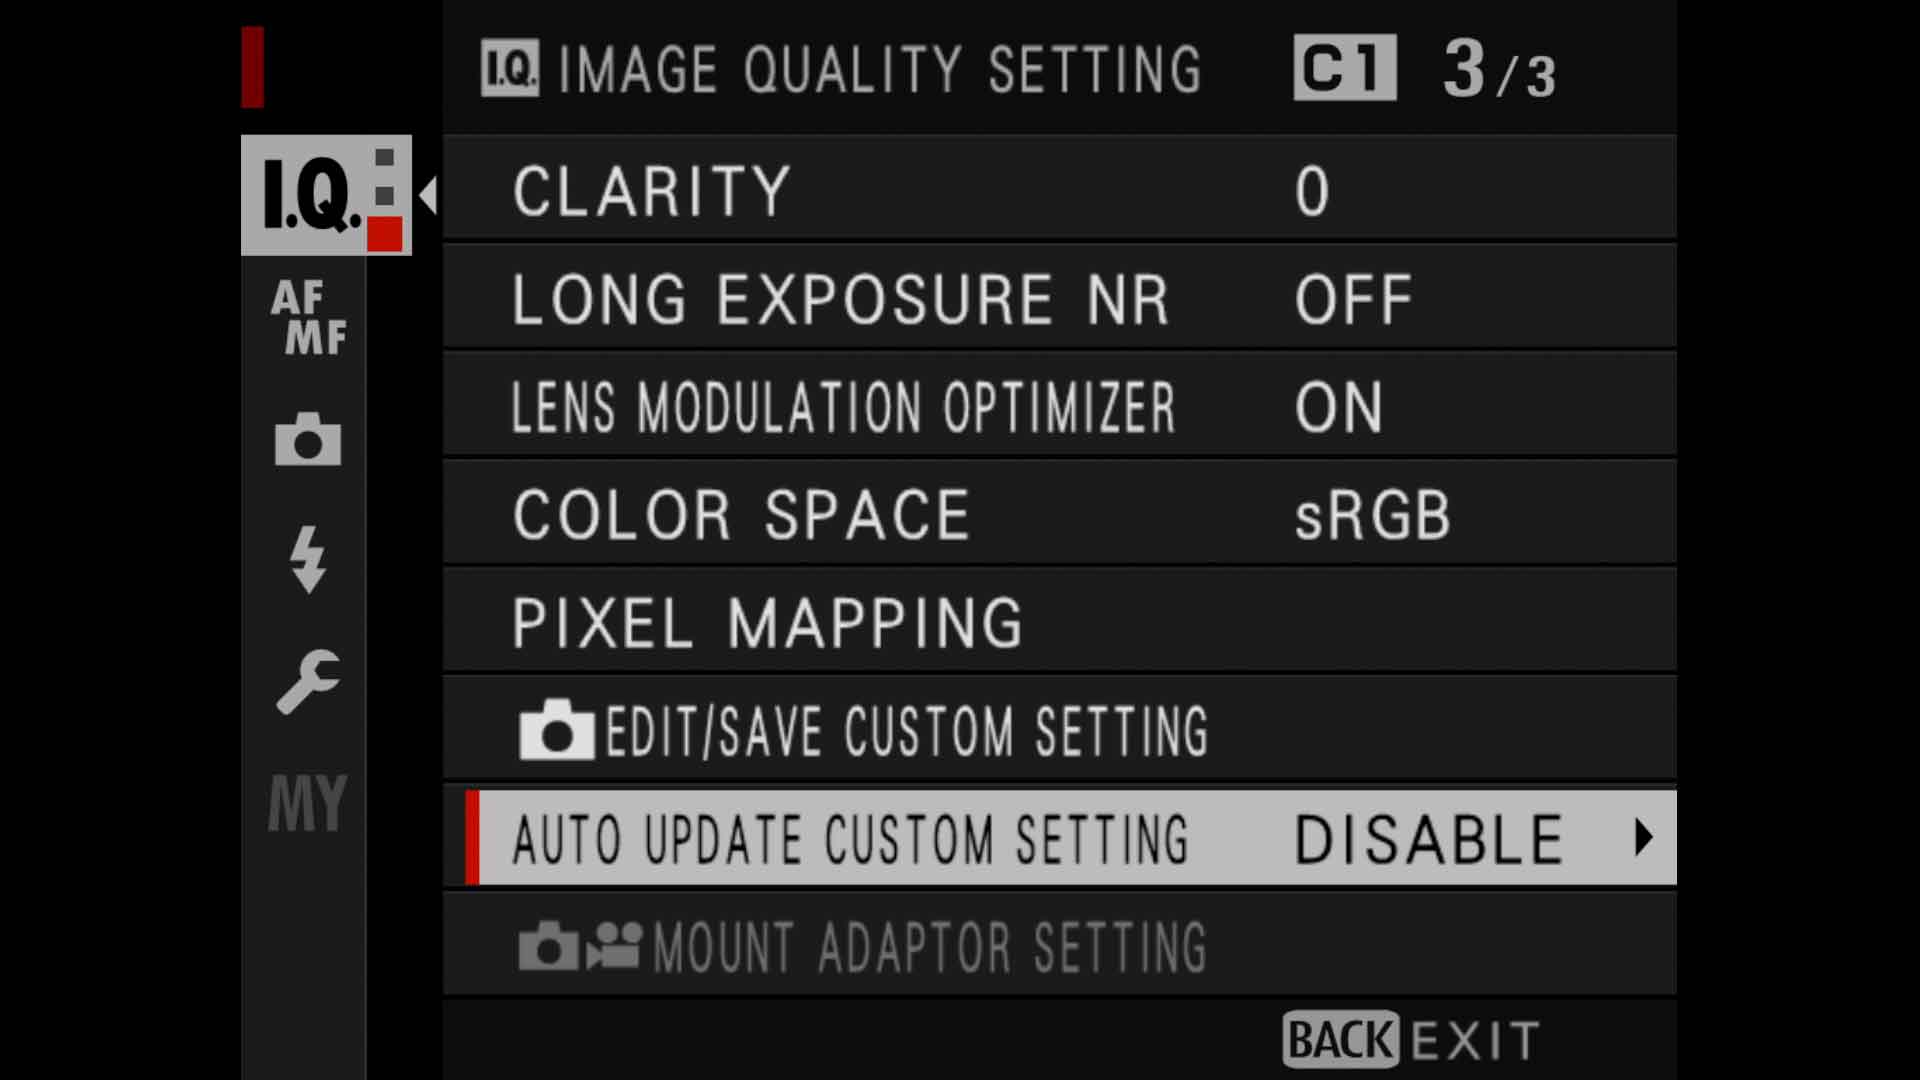 Auto Update Custom Setting on Fuji GFX 100s